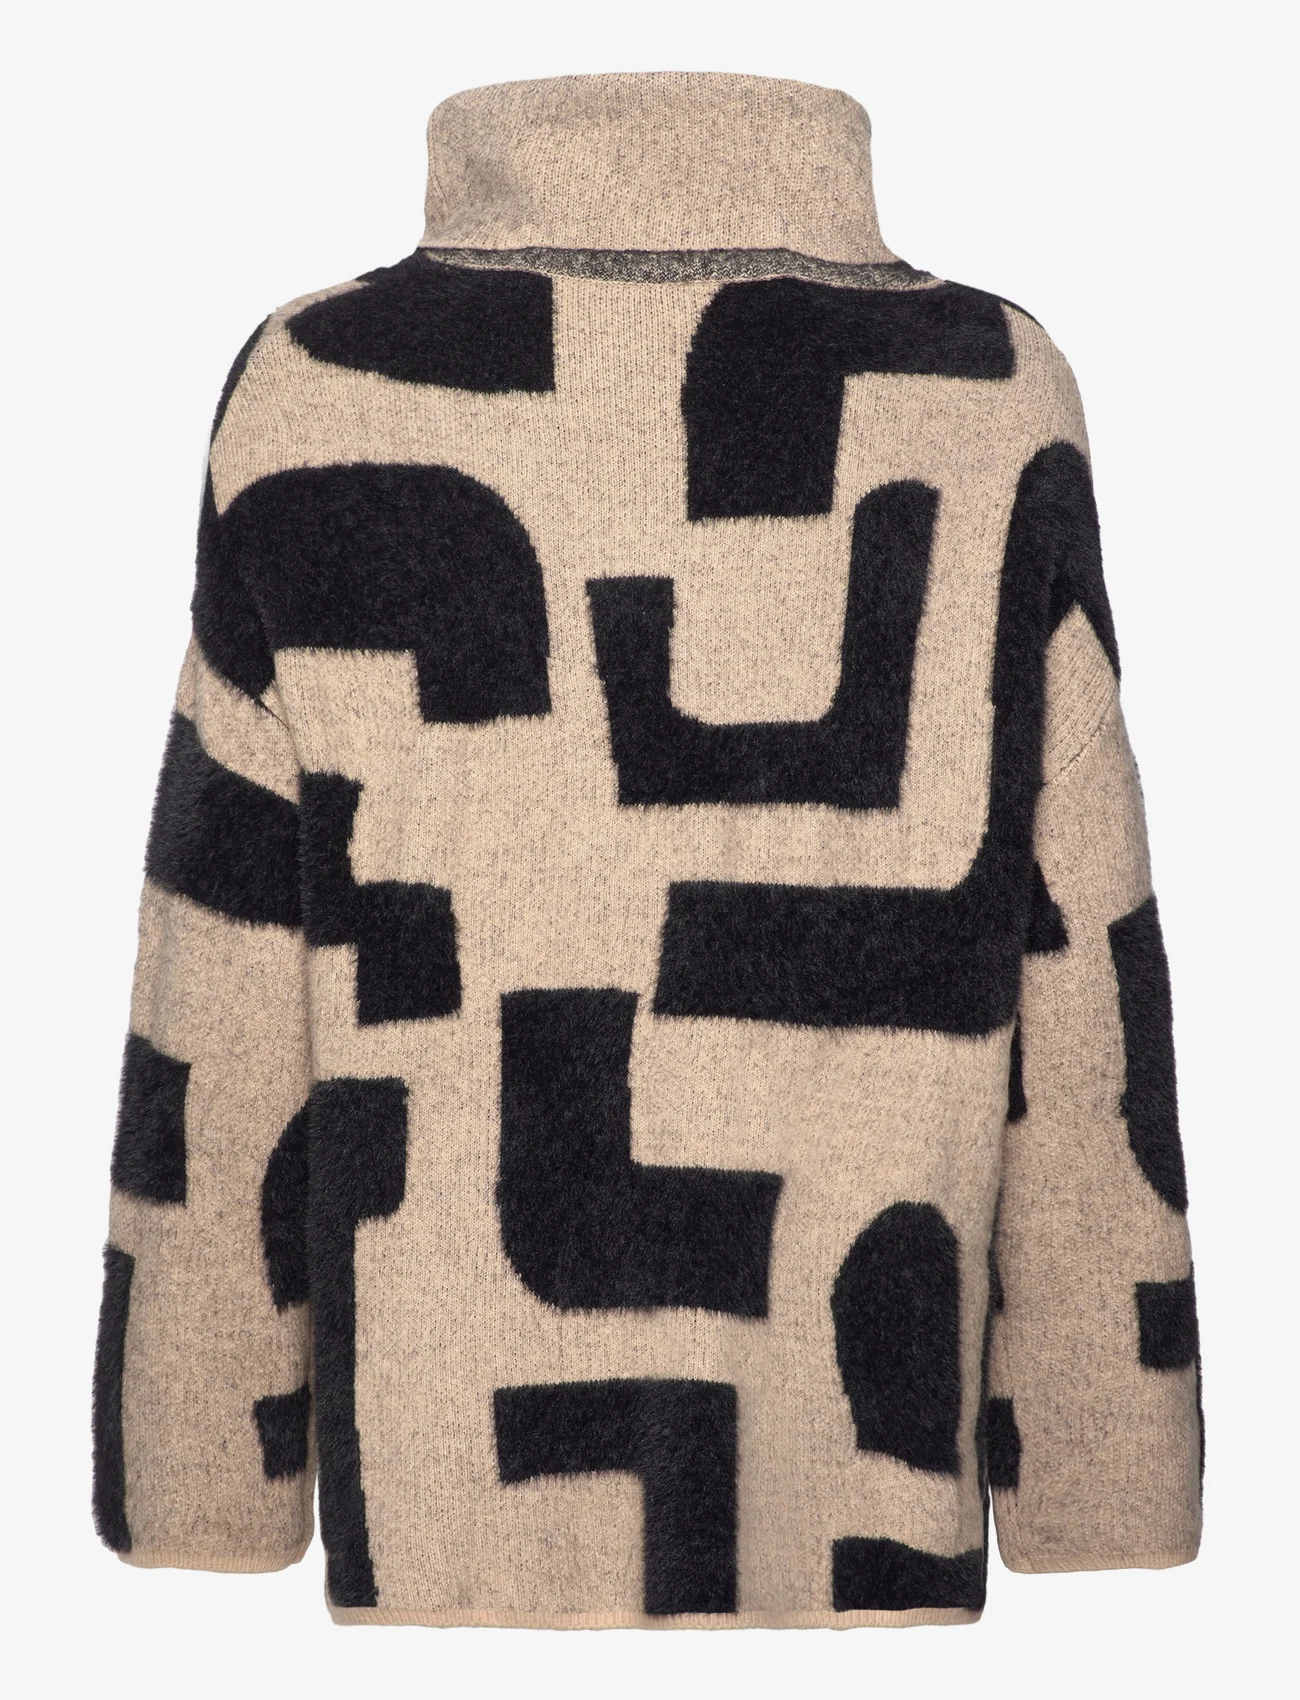 Tom Tailor - Knit intarsia pullover - turtleneck - beige geometric knit pattern - 1